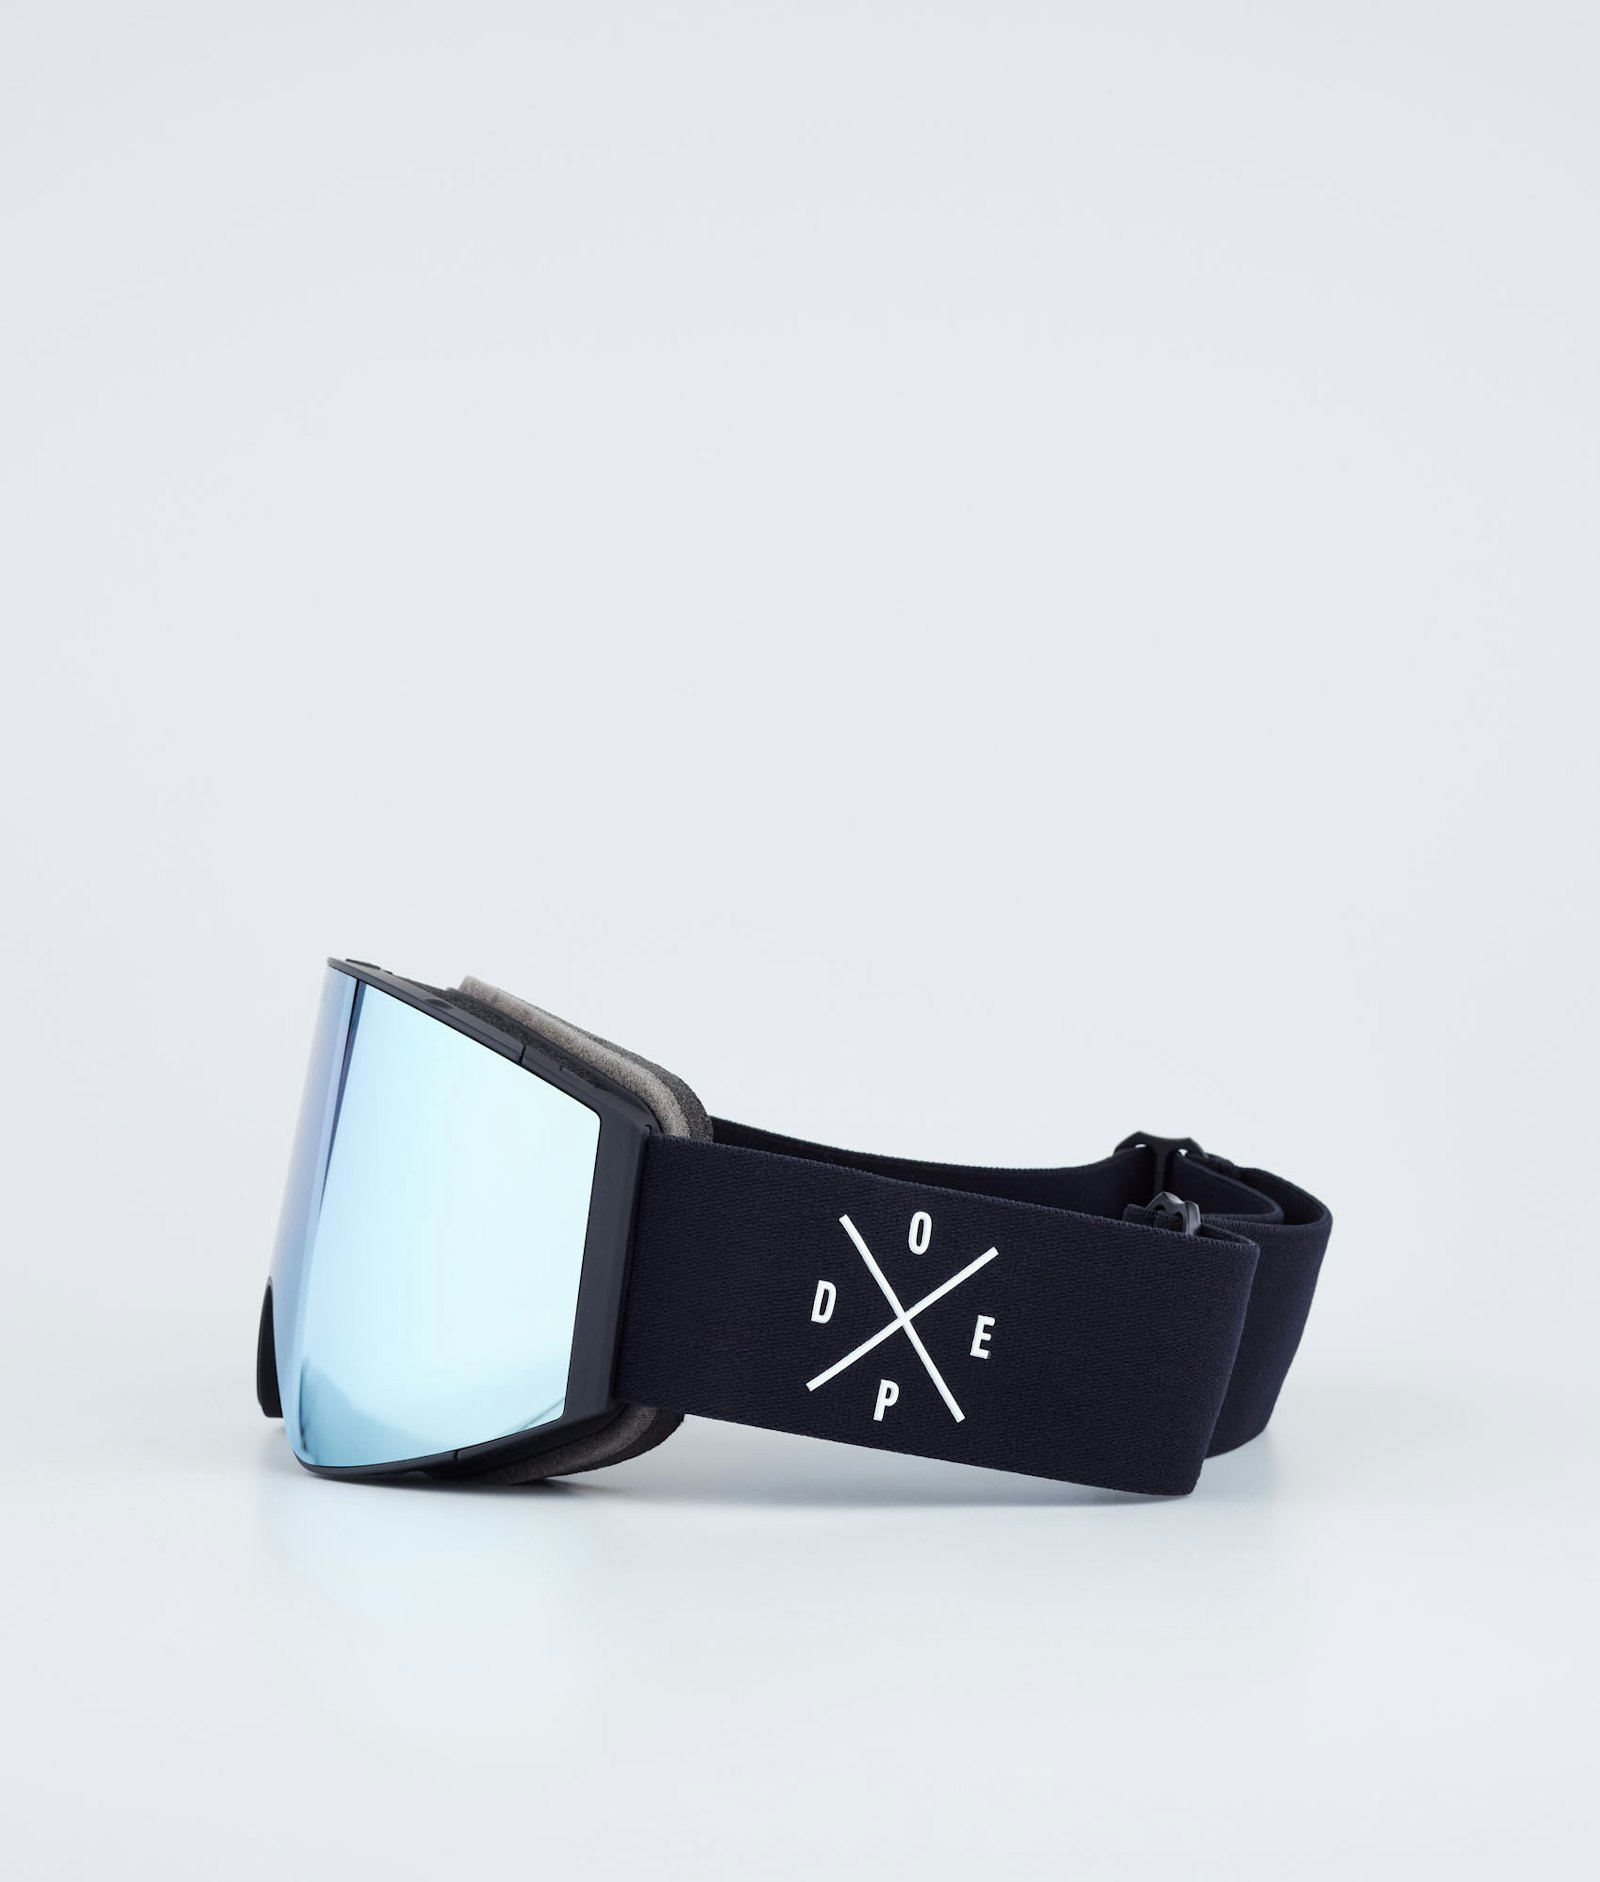 Sight 2021 Ski Goggles Black/Blue Mirror